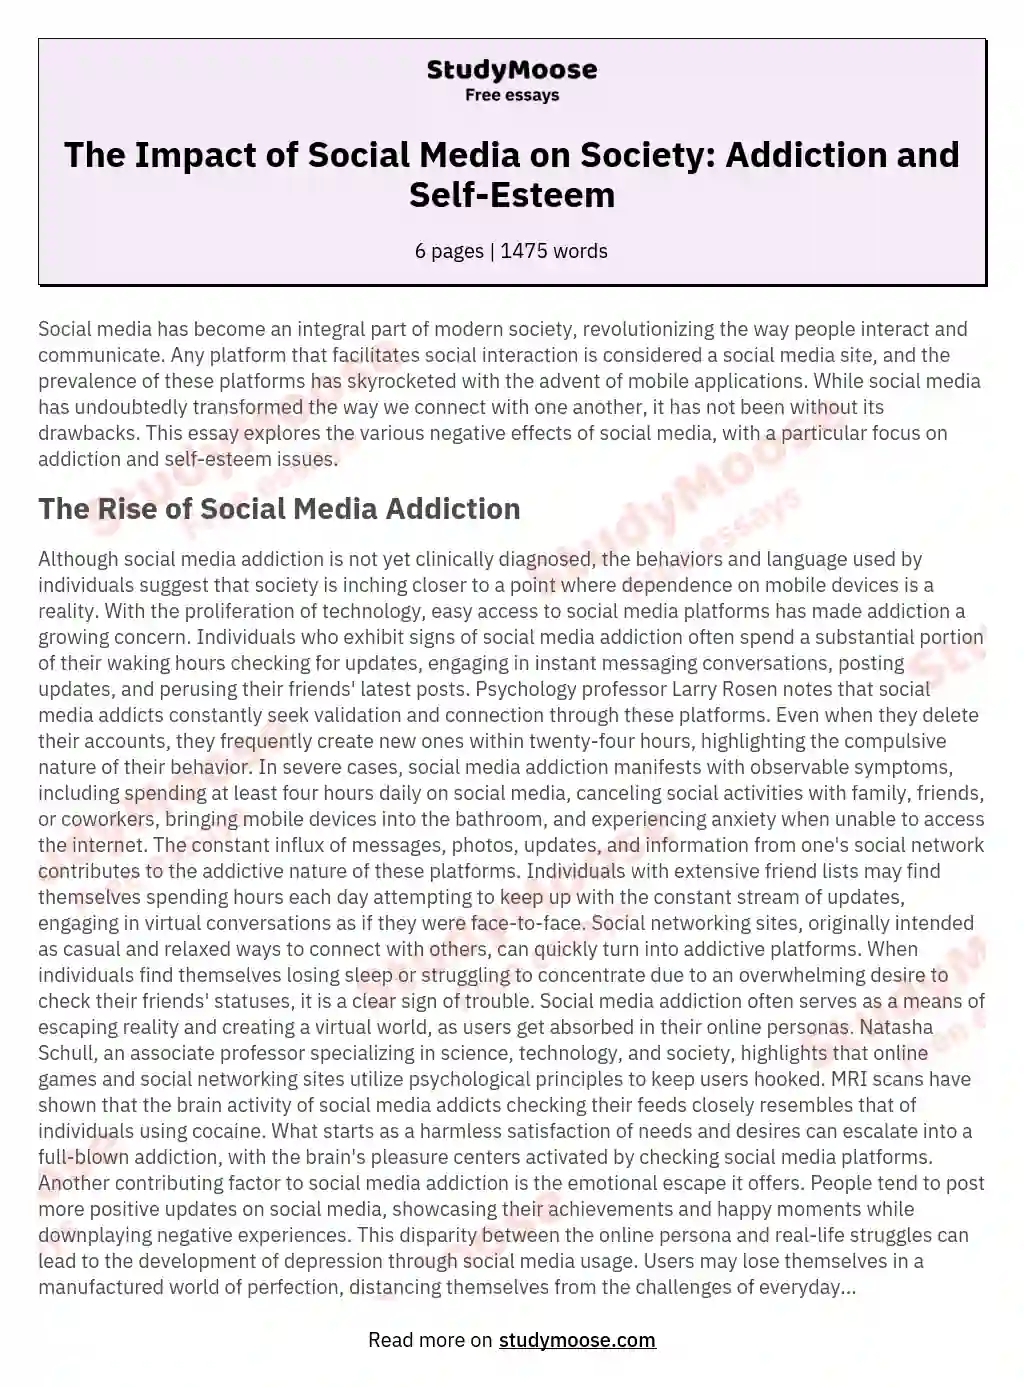 The Impact of Social Media on Society: Addiction and Self-Esteem essay